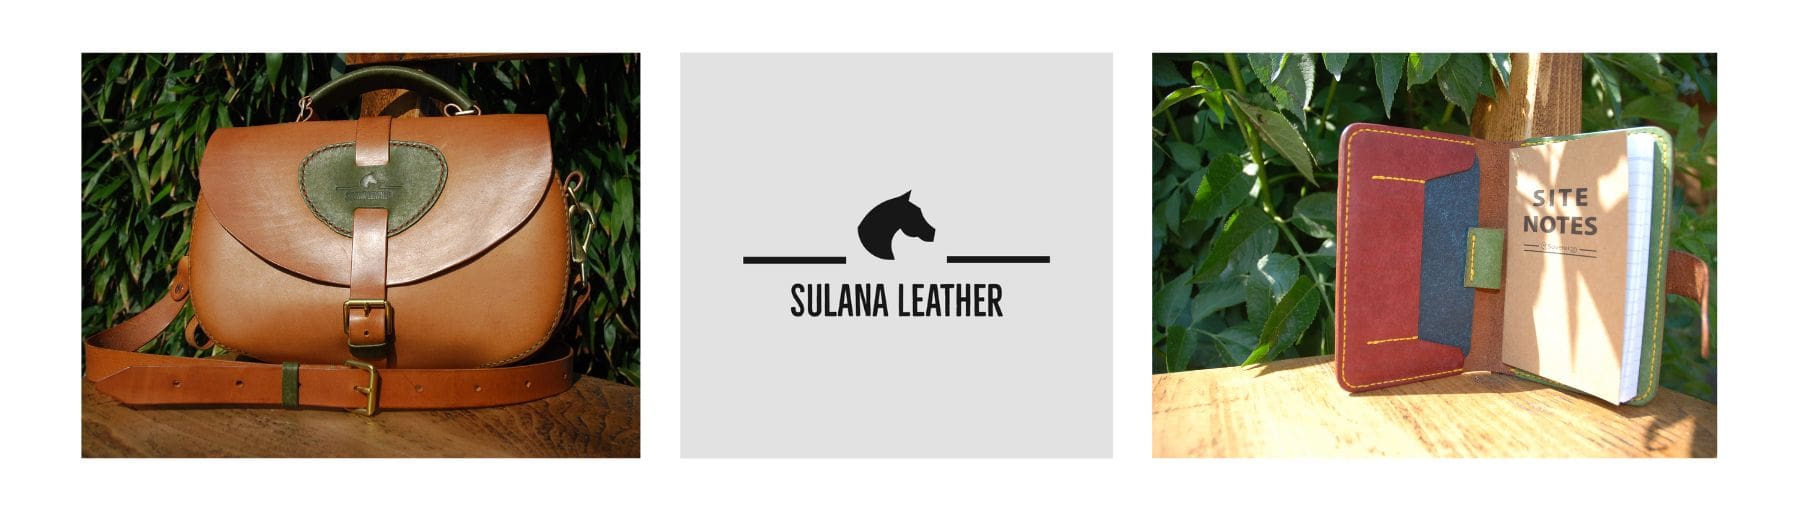 Handmade Leather Bag Charm Leather Dog Bag Charmkey Chain 